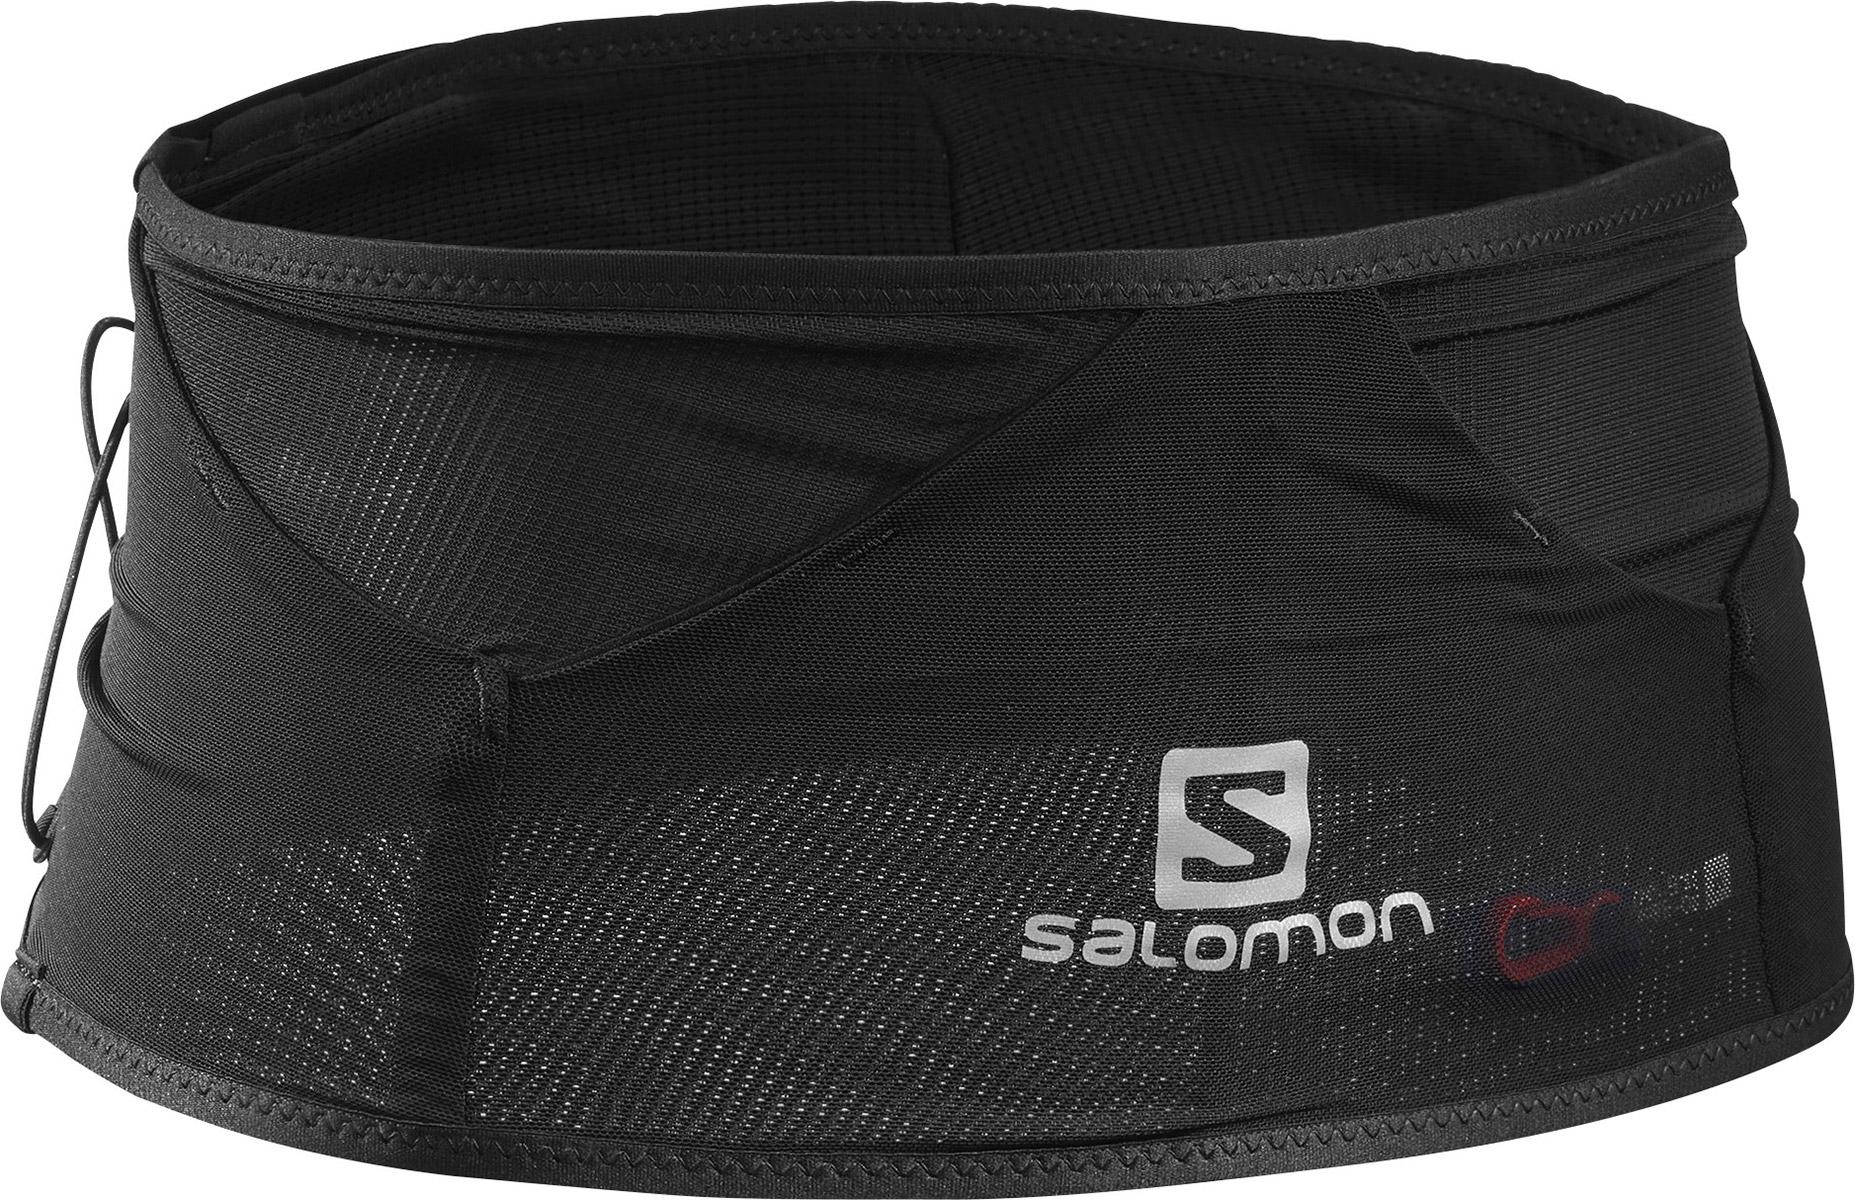 Salomon Advanced Skin Belt - Black/ebony